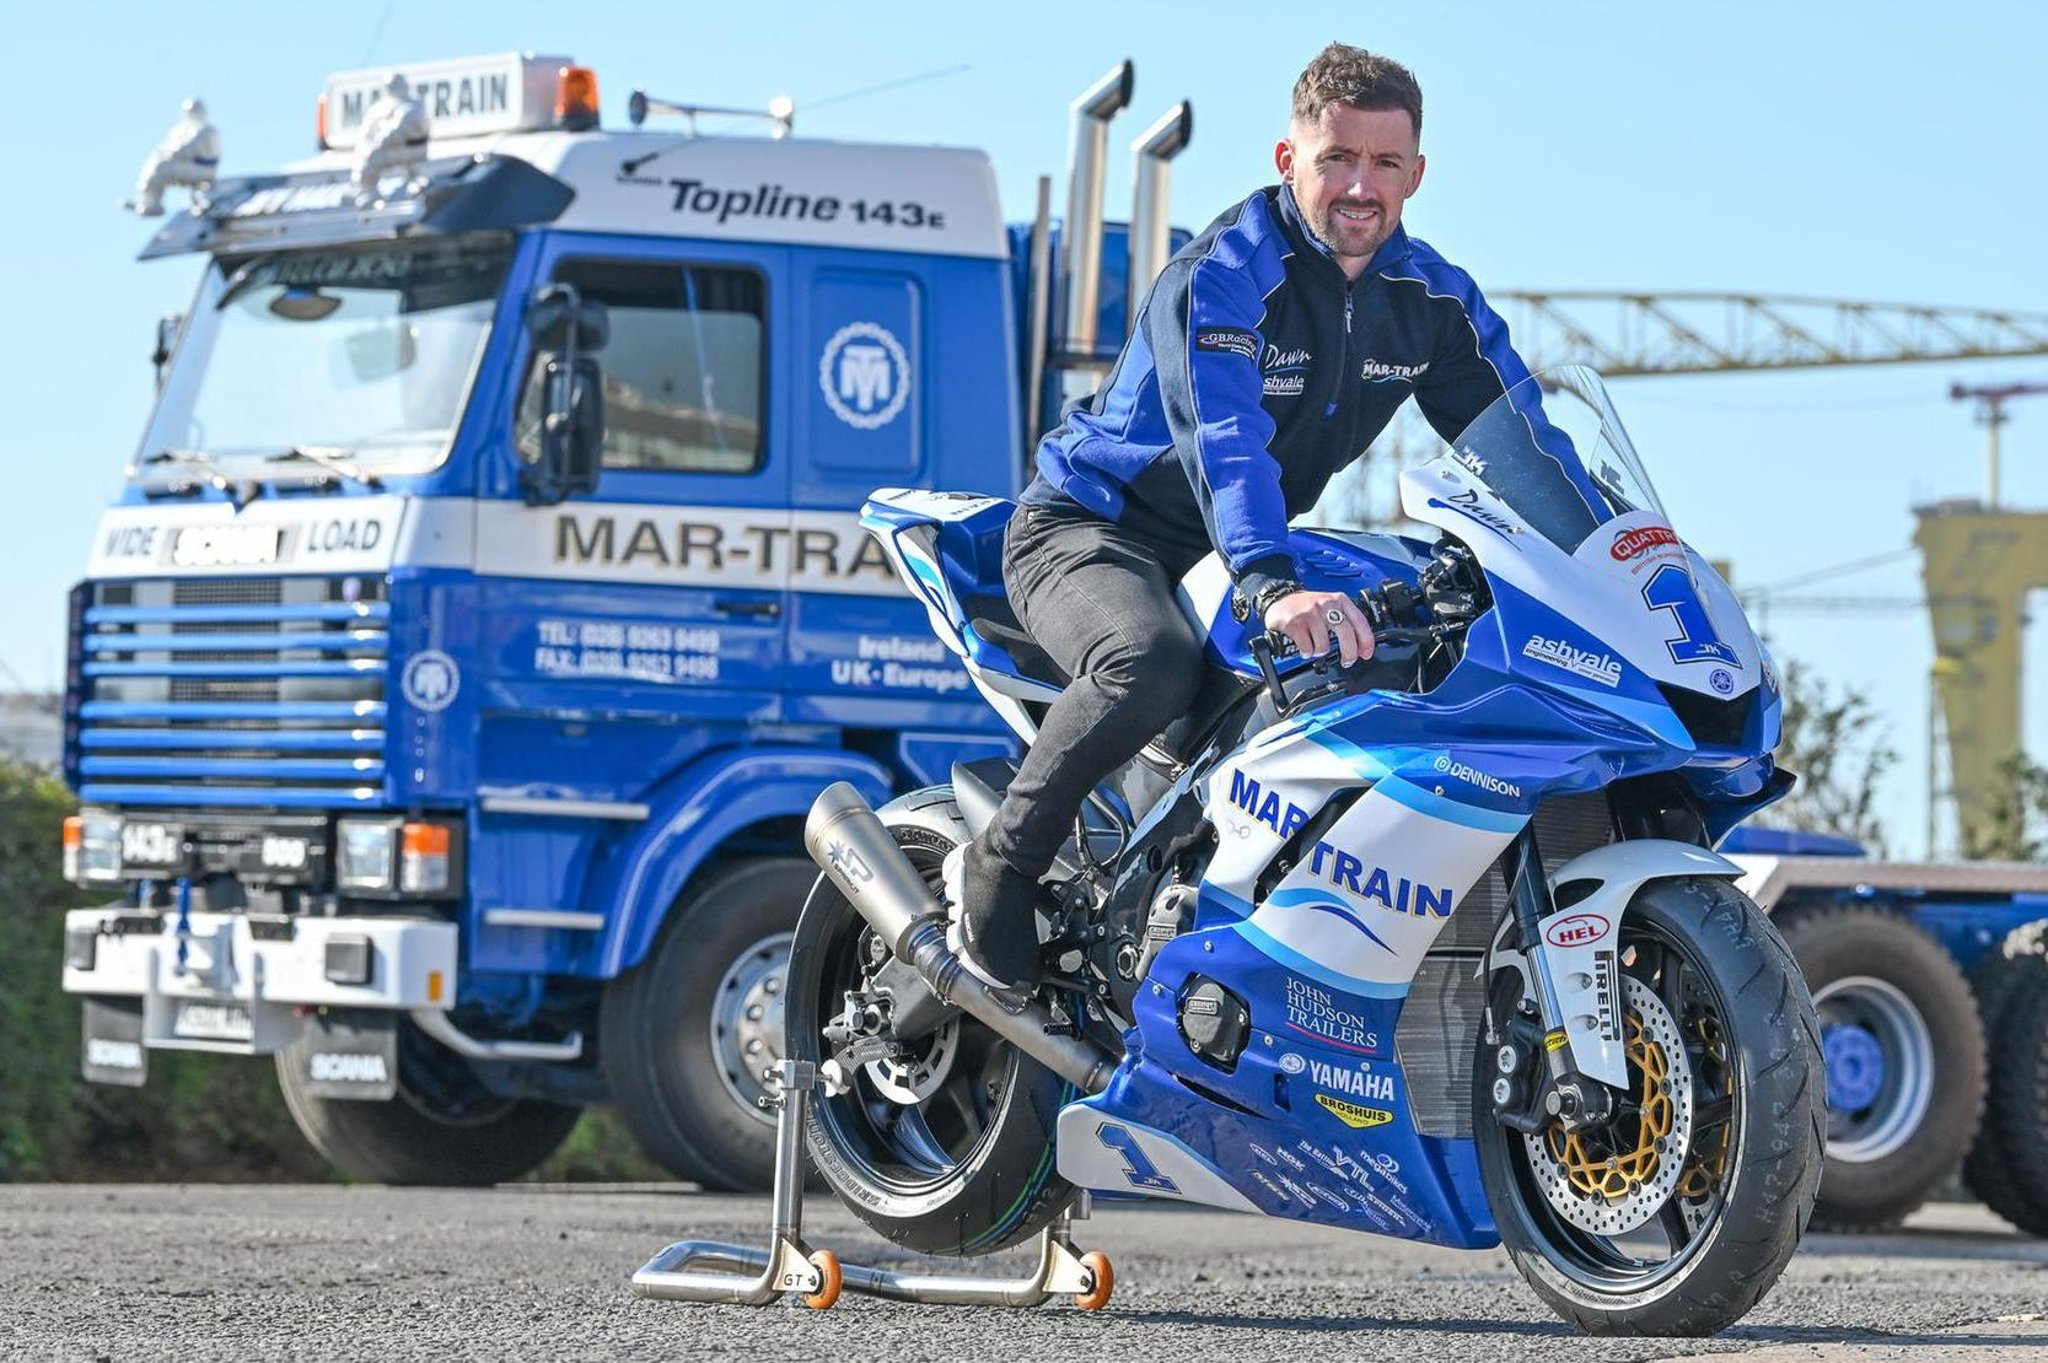 Mar-Train Racing unveils British Supersport champion Jack Kennedy's 2022 Yamaha R6